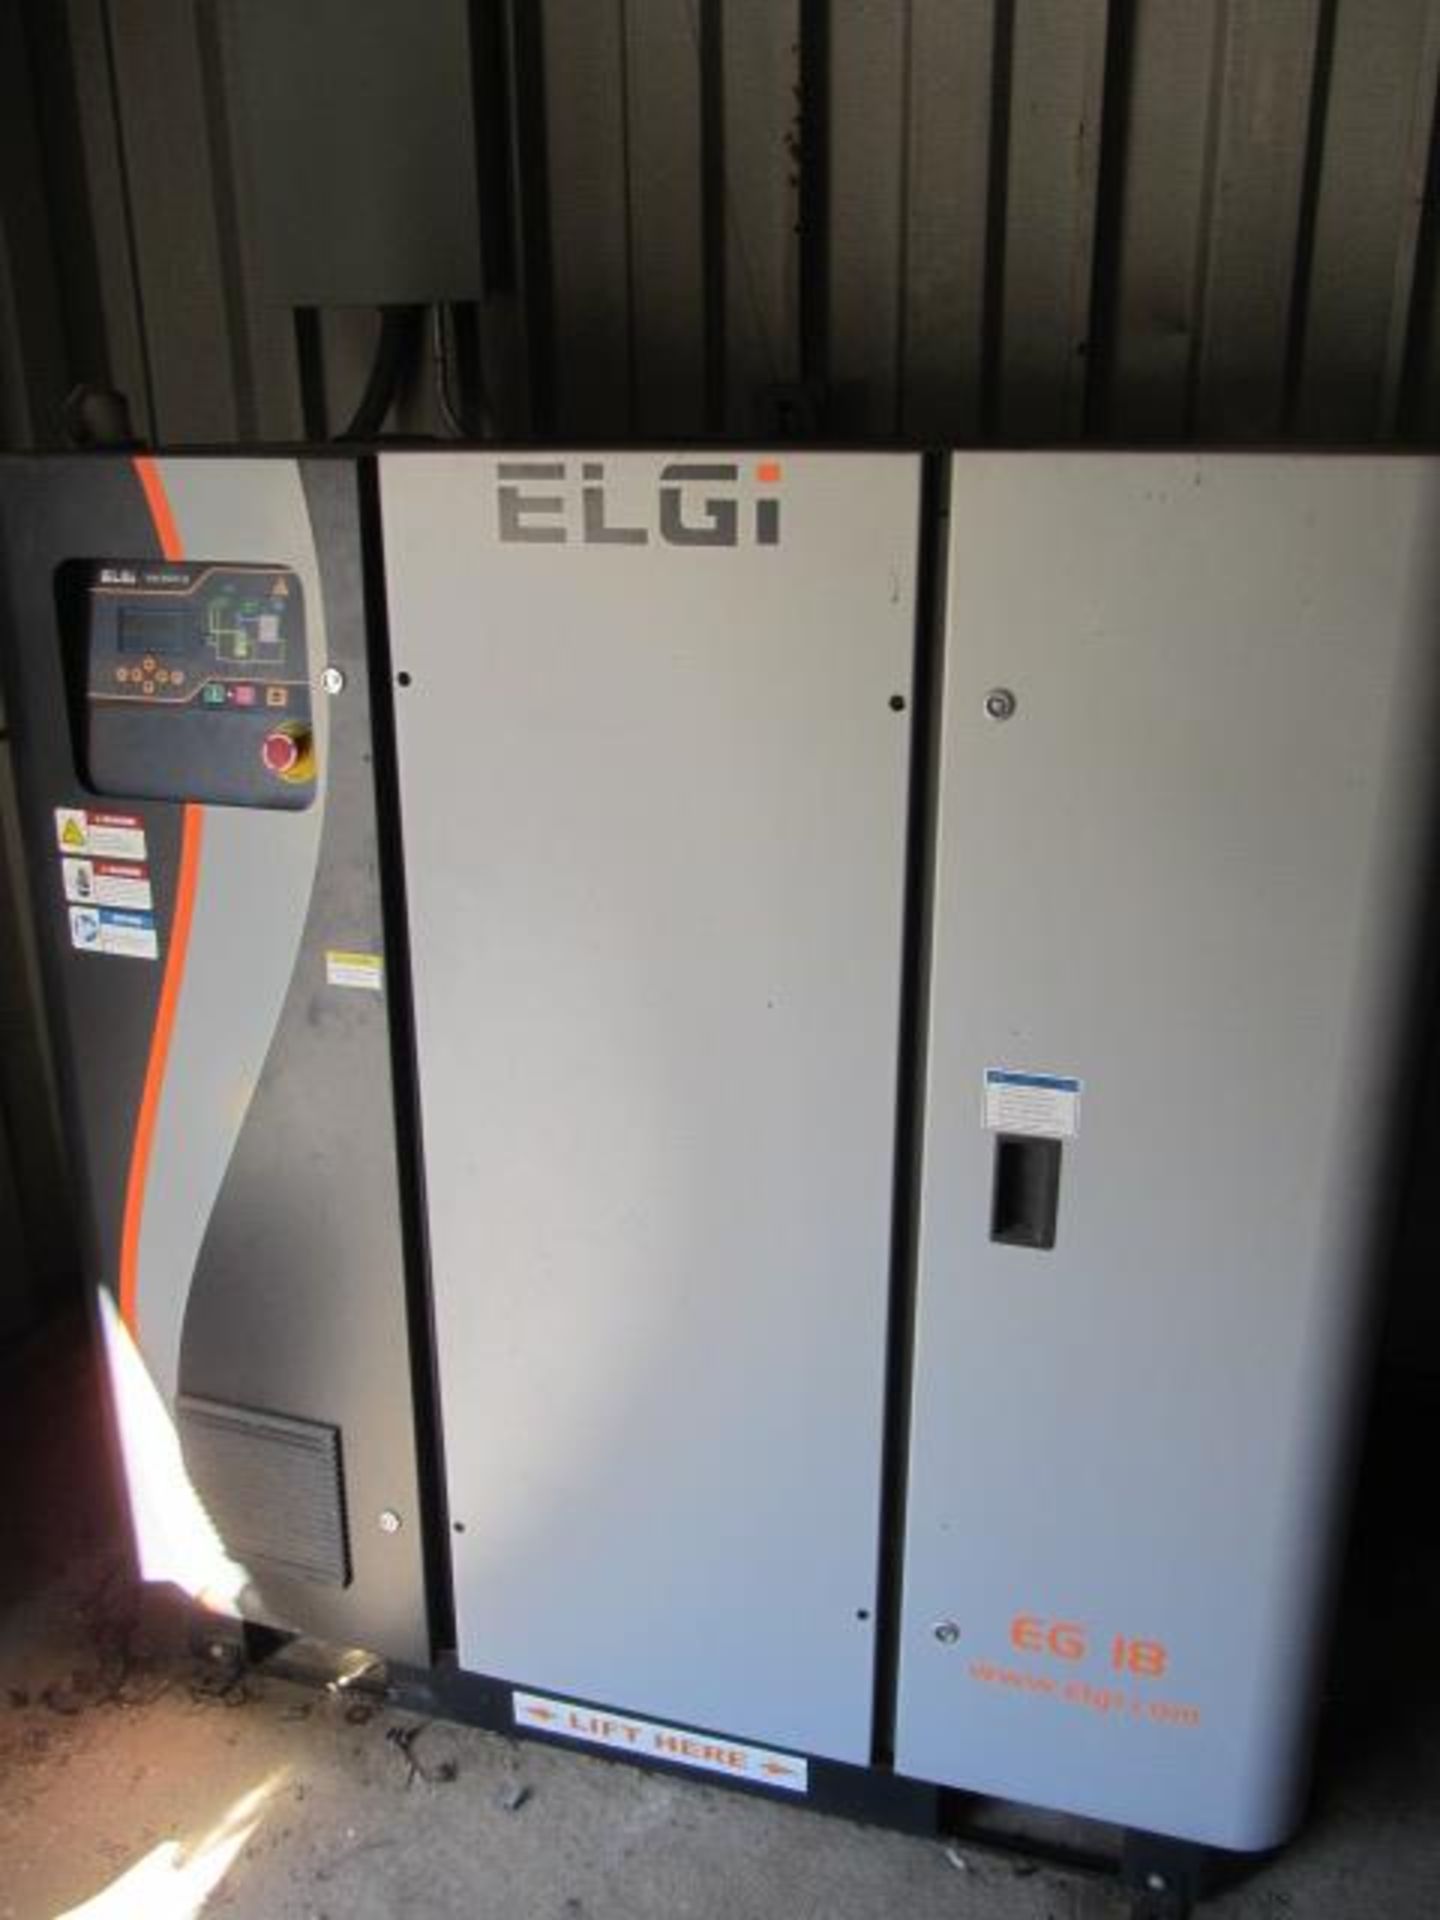 Elgi Model EG18-125 25 HP Rotary Screw Air Compressor with 125 PSI, Neuron II Controls, sn: - Image 2 of 5